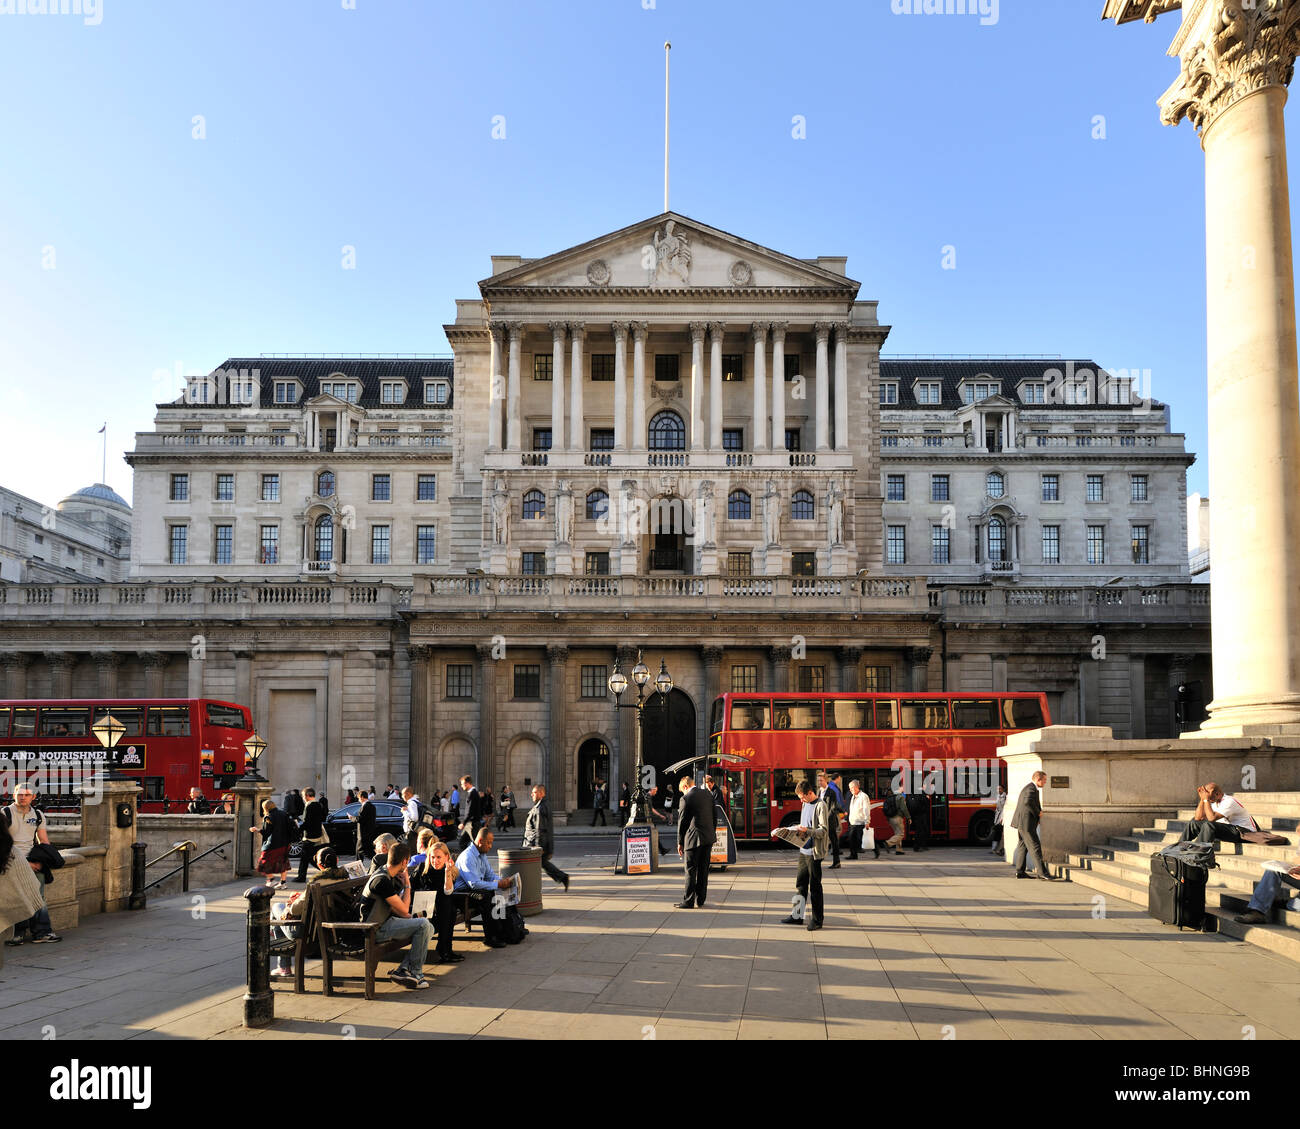 Banca d'Inghilterra sede di Londra Foto stock - Alamy